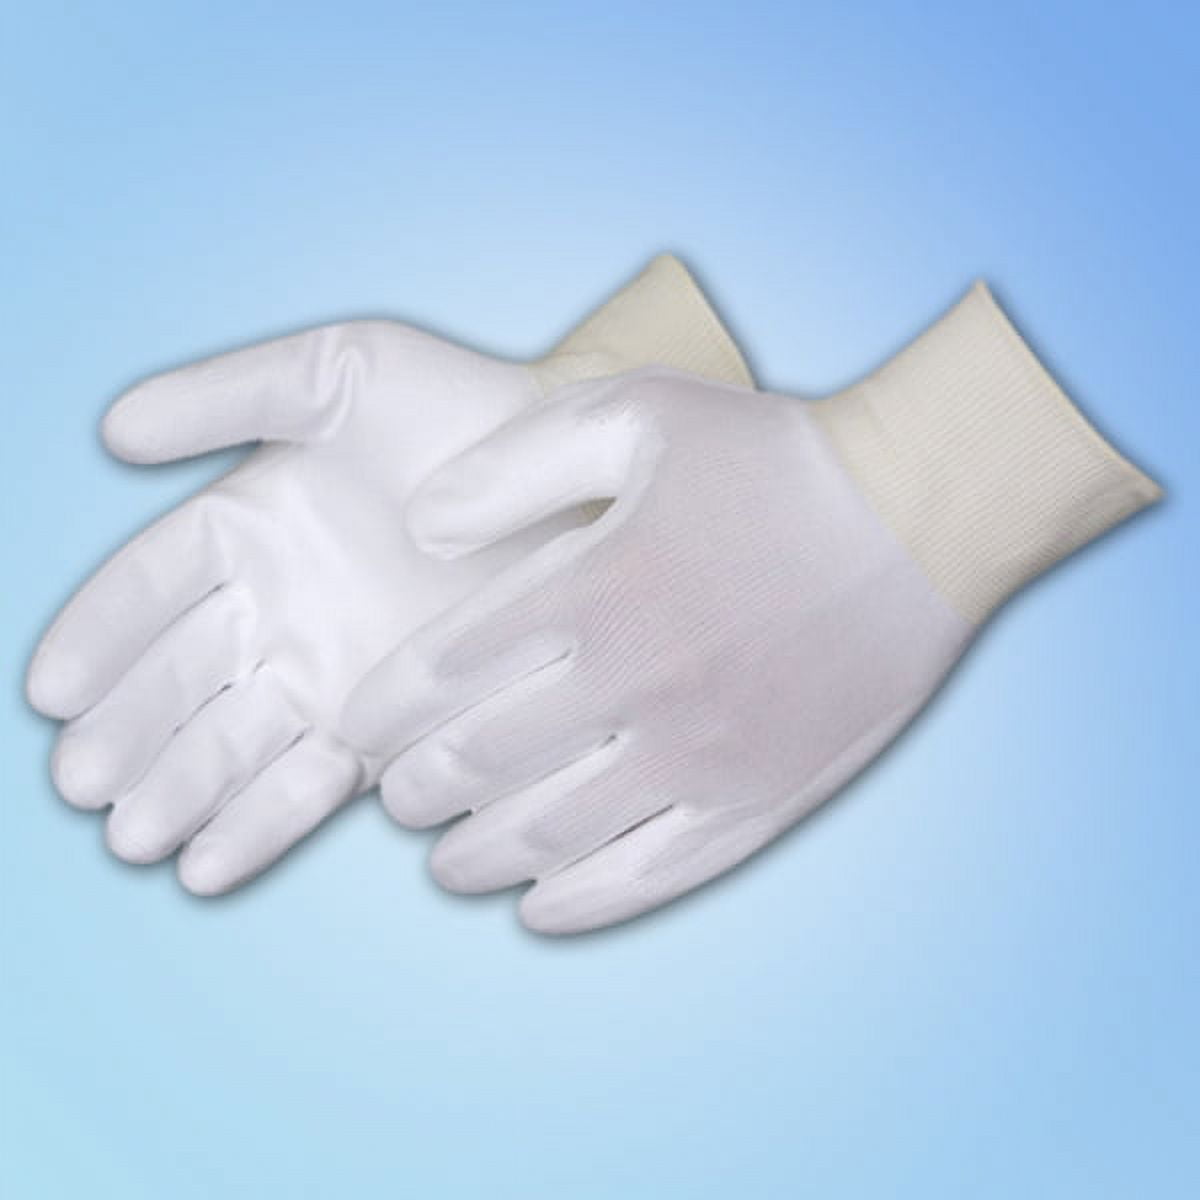 Empiral M143720120 Gorilla Flex II Nitrile Palm Coated Gloves